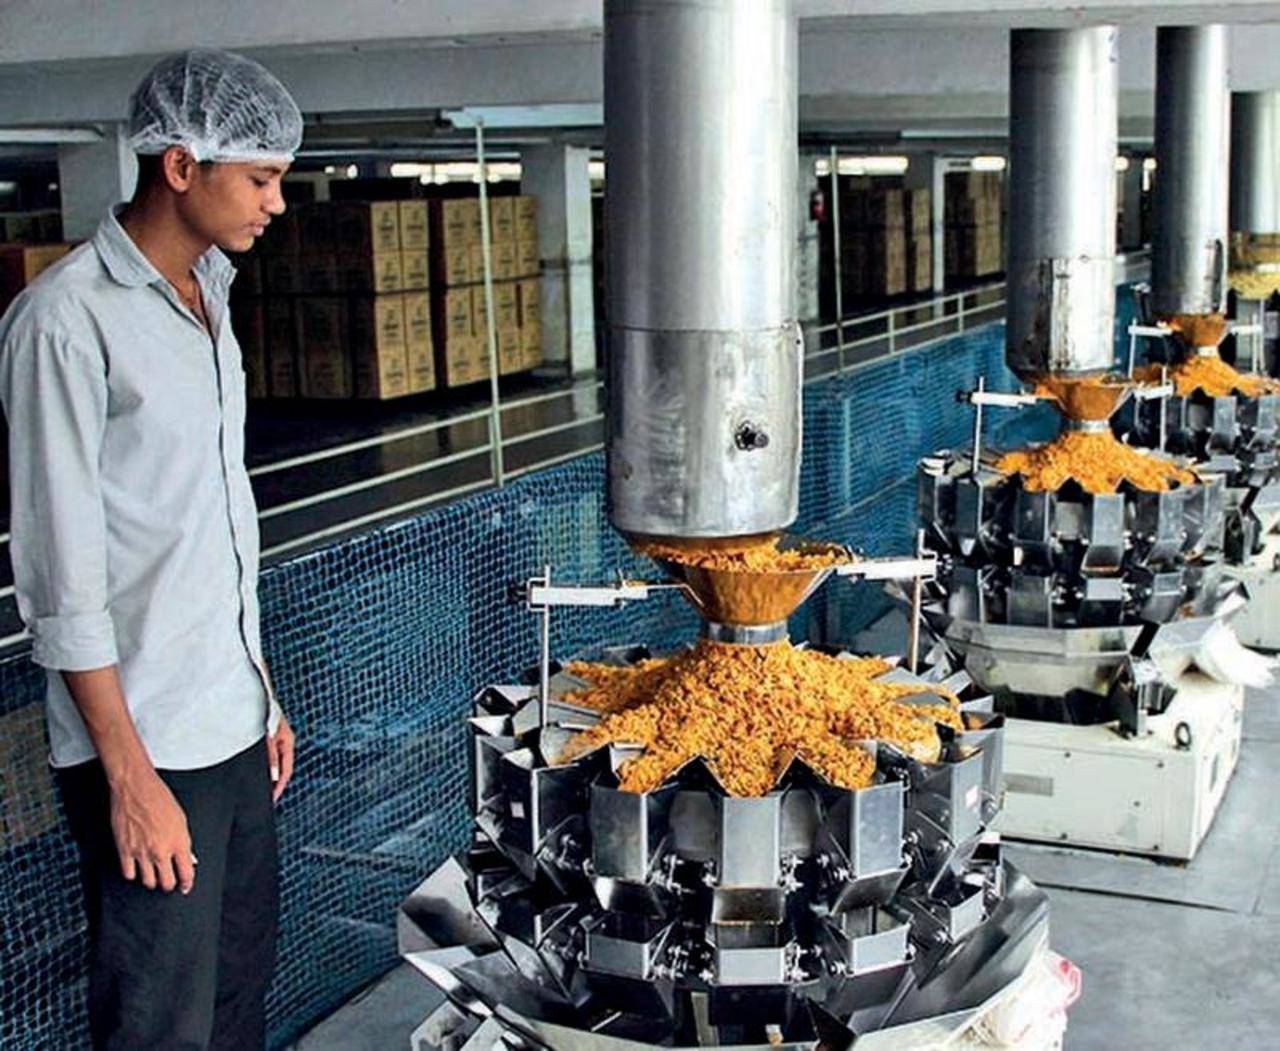 Rajkot namkeen makers face staff shortage as demand spikes 200% | Rajkot News - Times of India